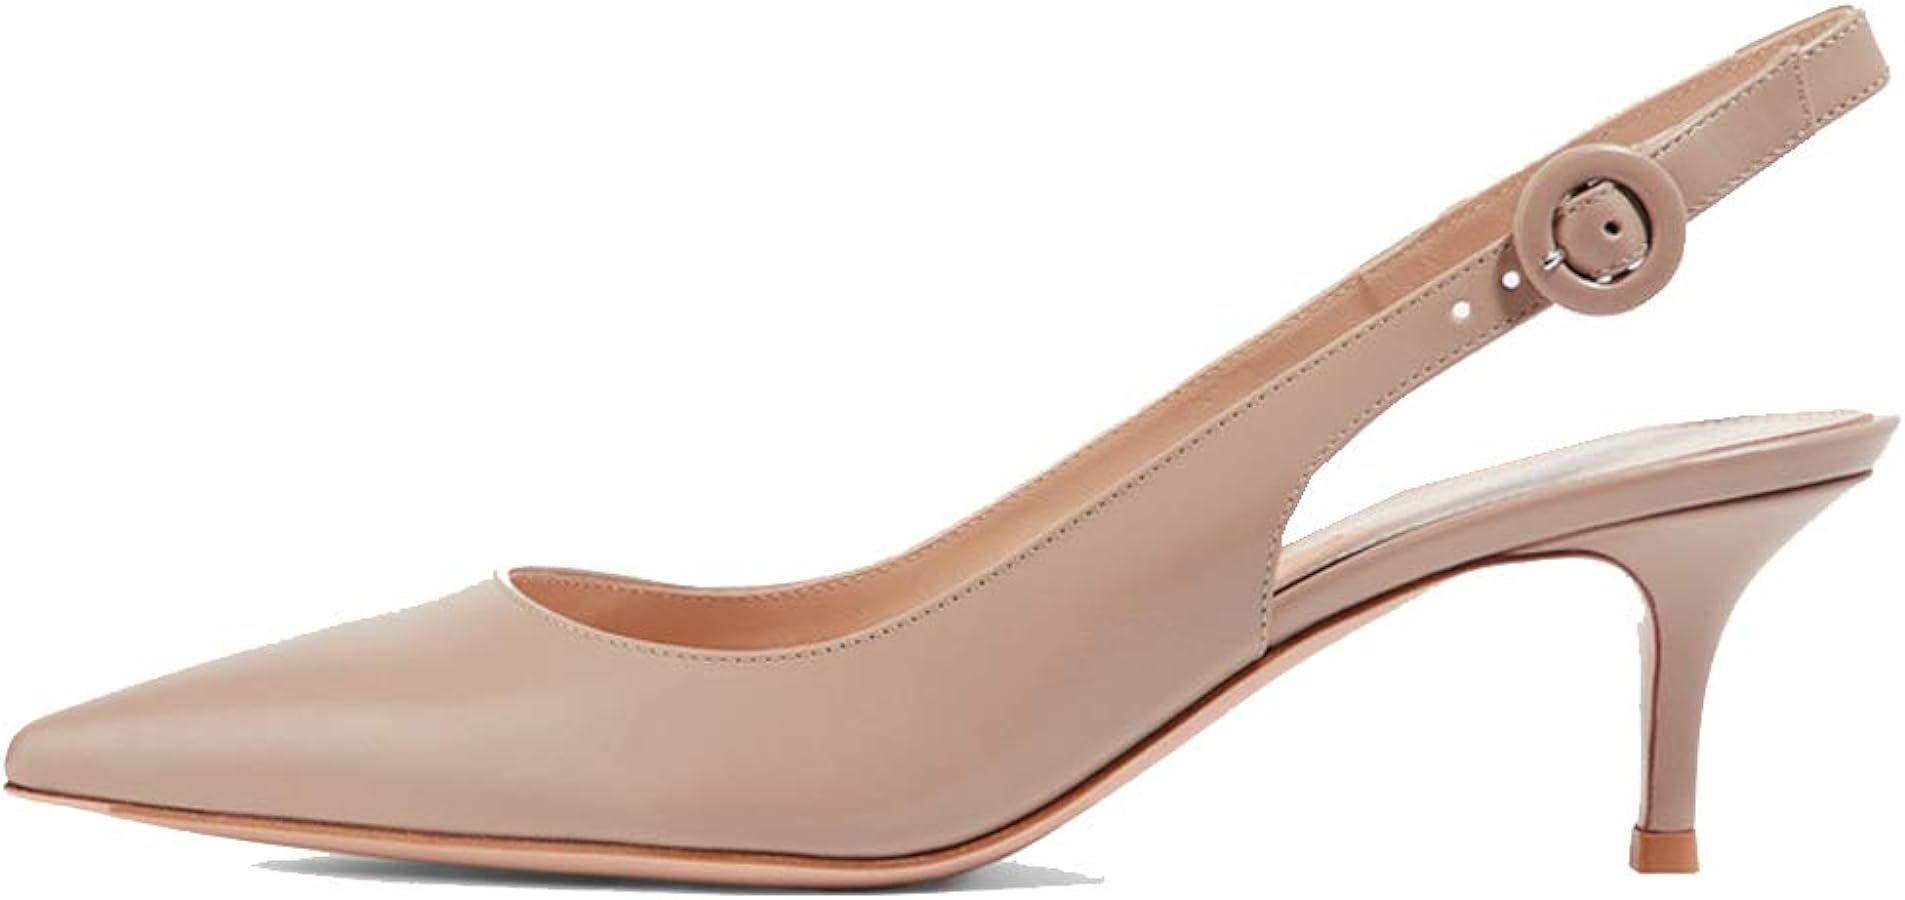 Slingback Pumps, Women's Pointed Toe Low Heel Sandals Slingback Strap Kitten Heel Pumps Evening Party Wedding Shoes | Amazon (US)